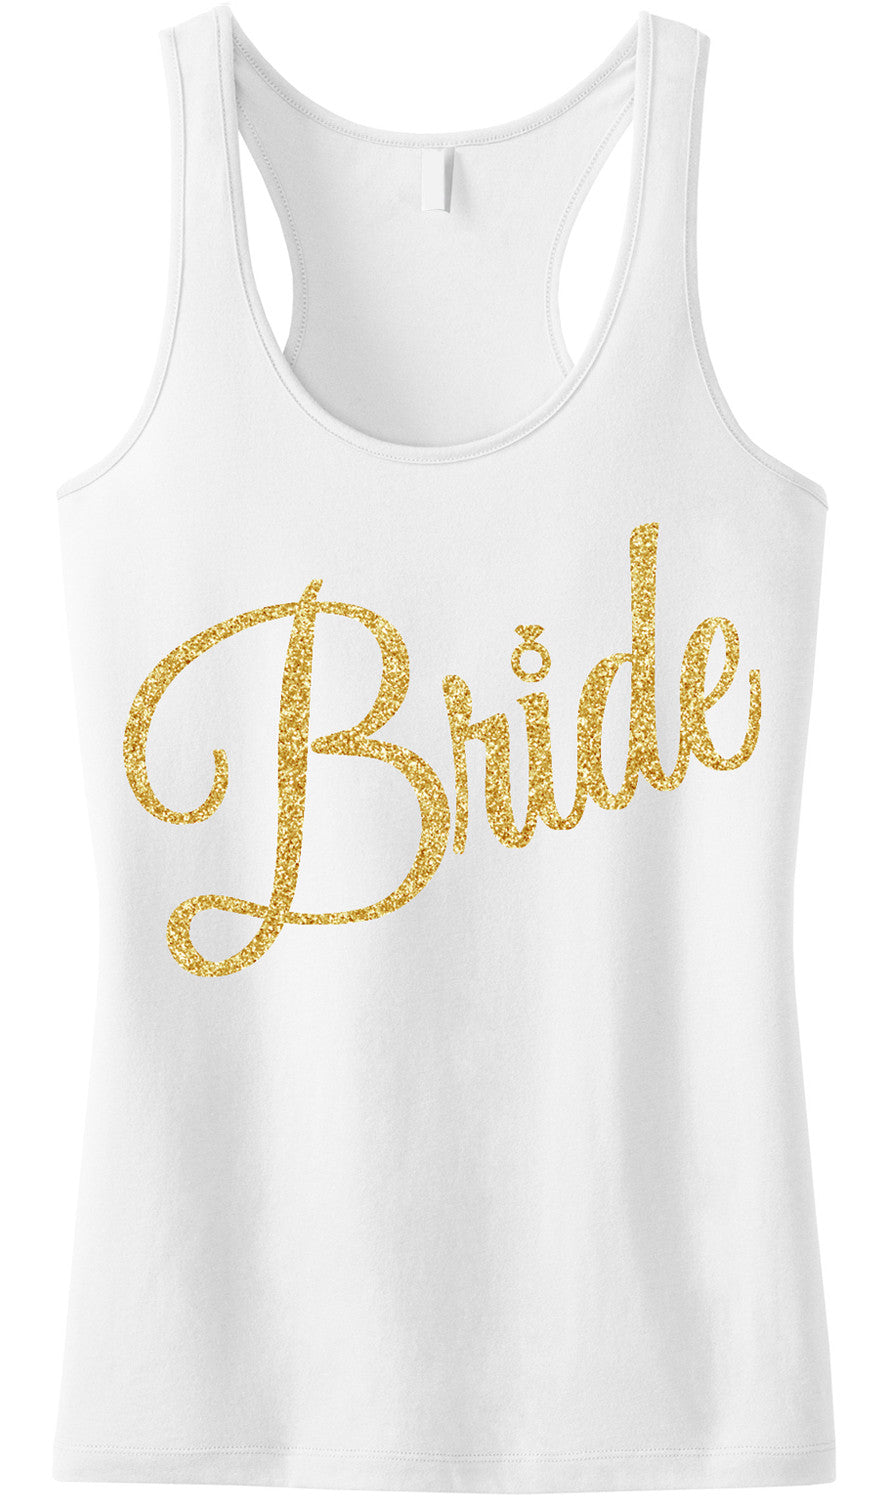 BRIDE Gold Glitter Cursive Tank Top